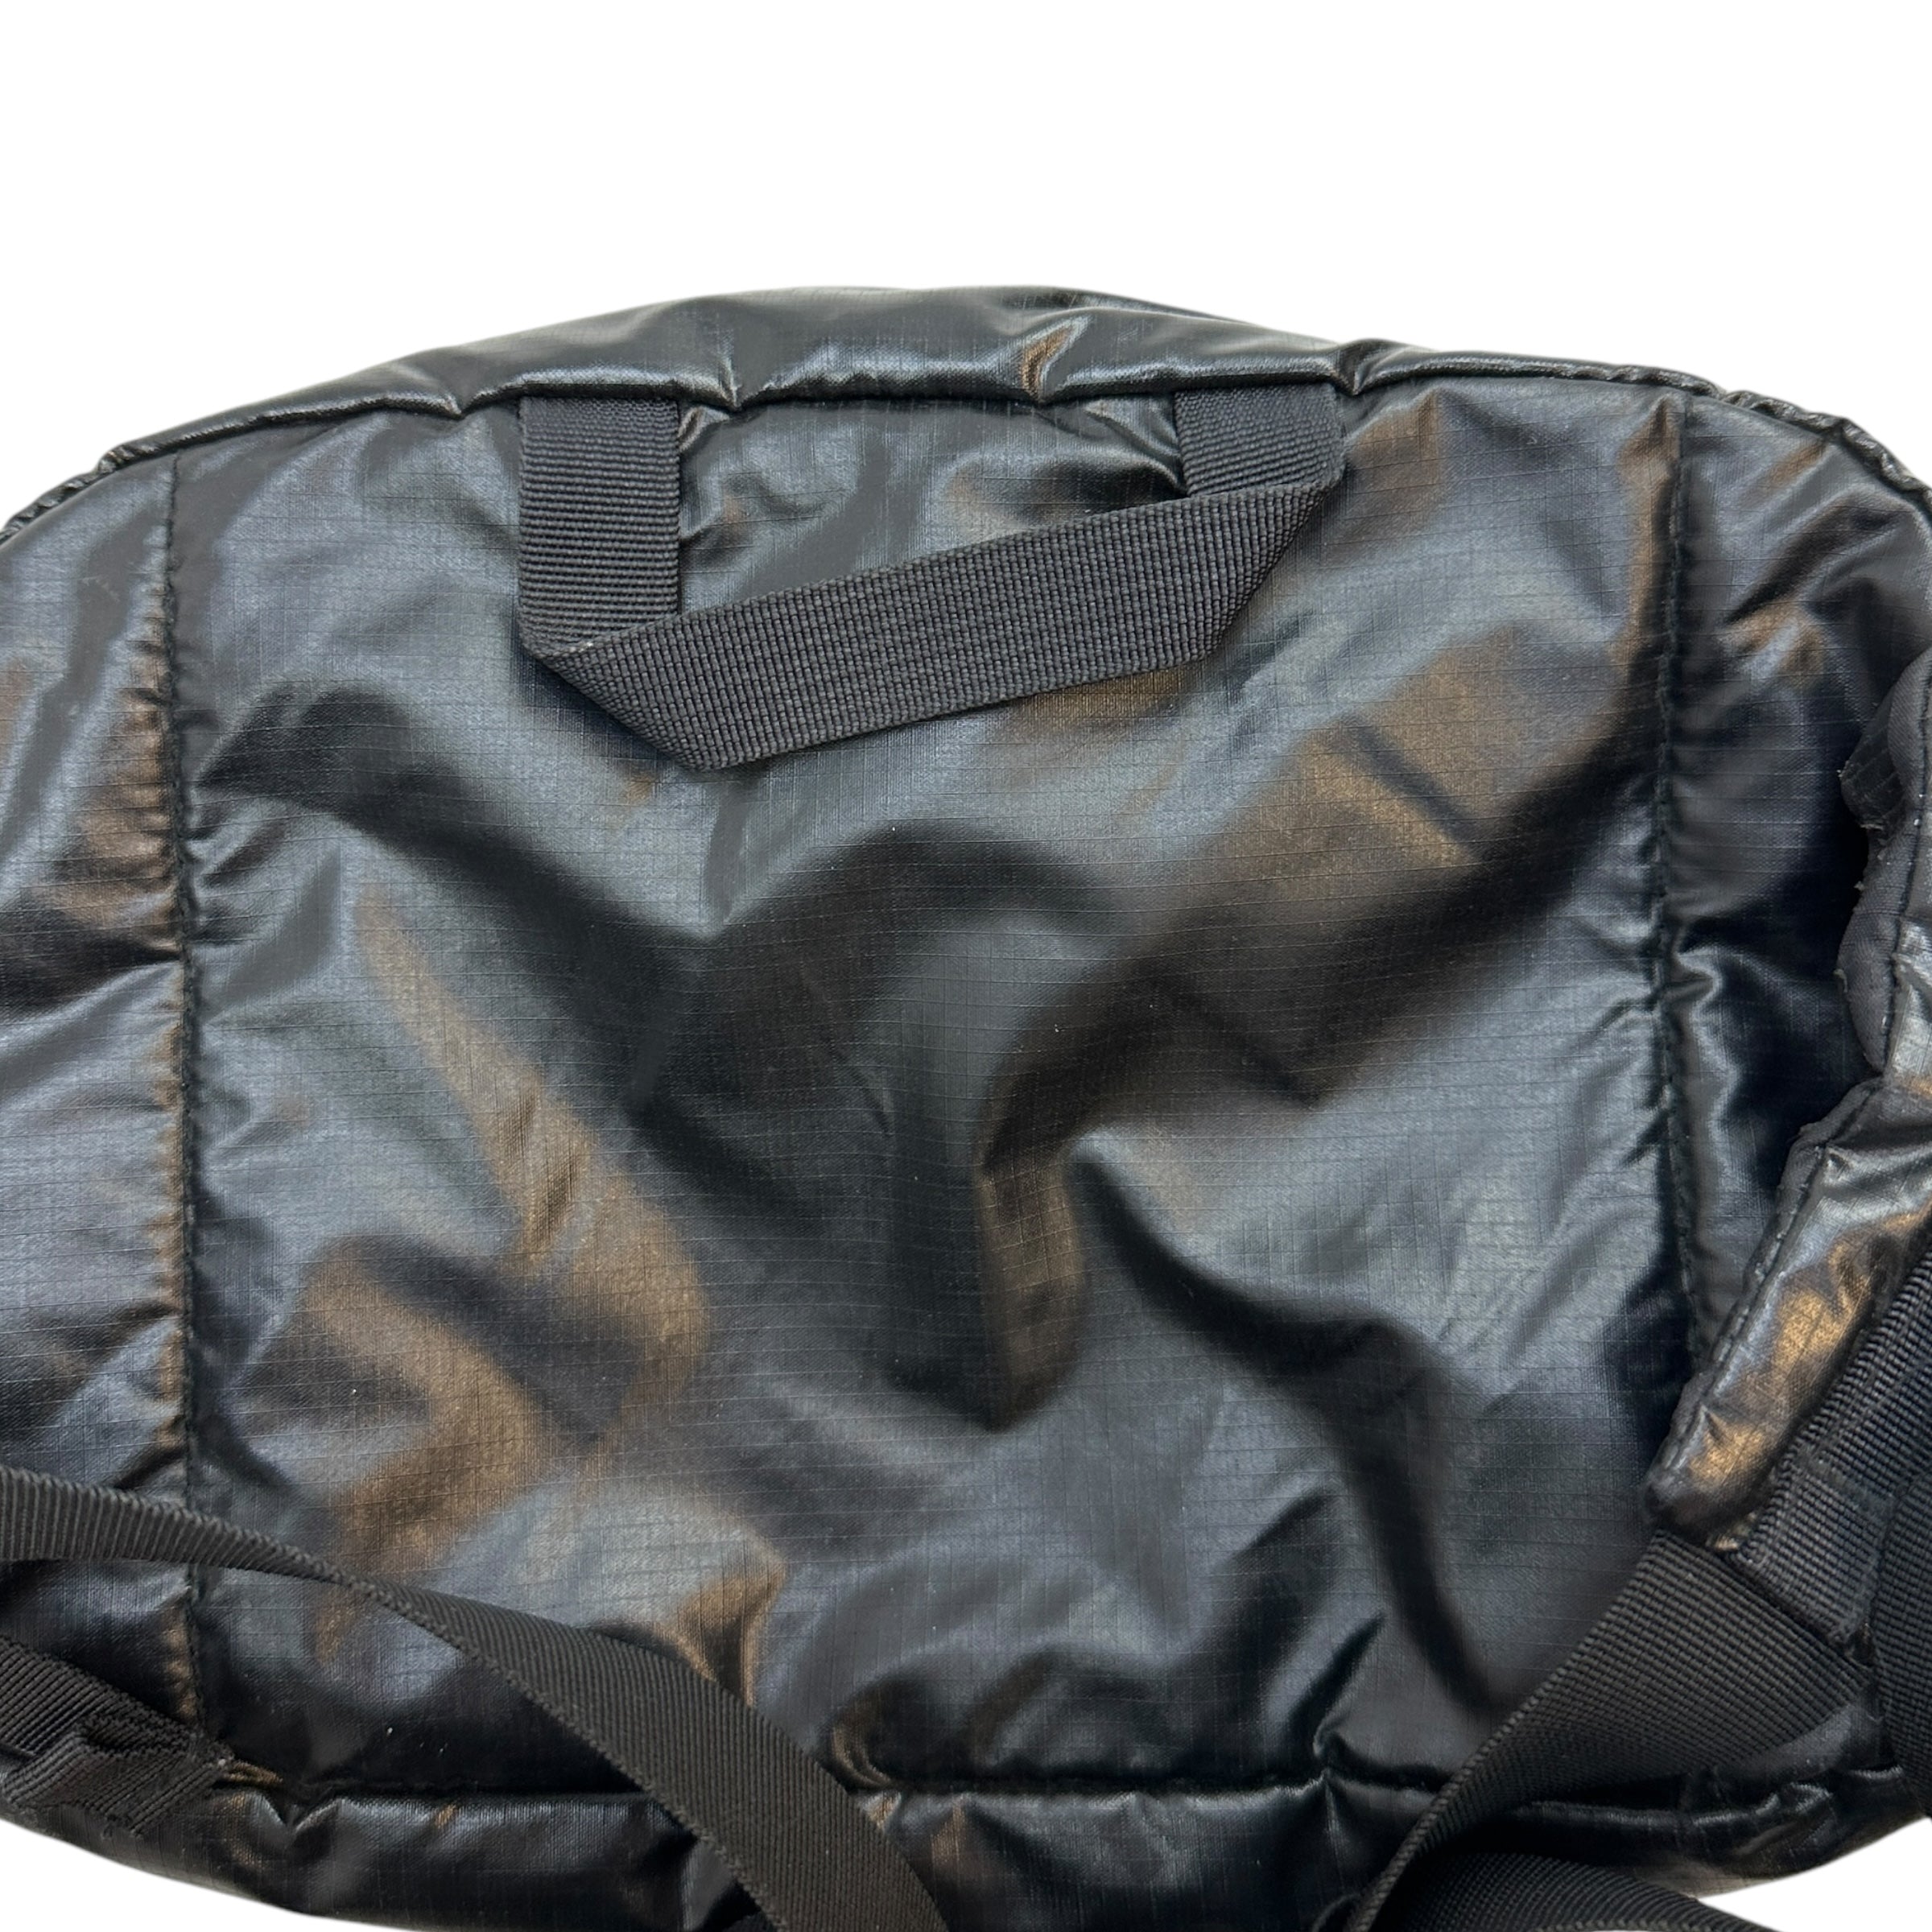 FW17 Supreme Waist Bag Black